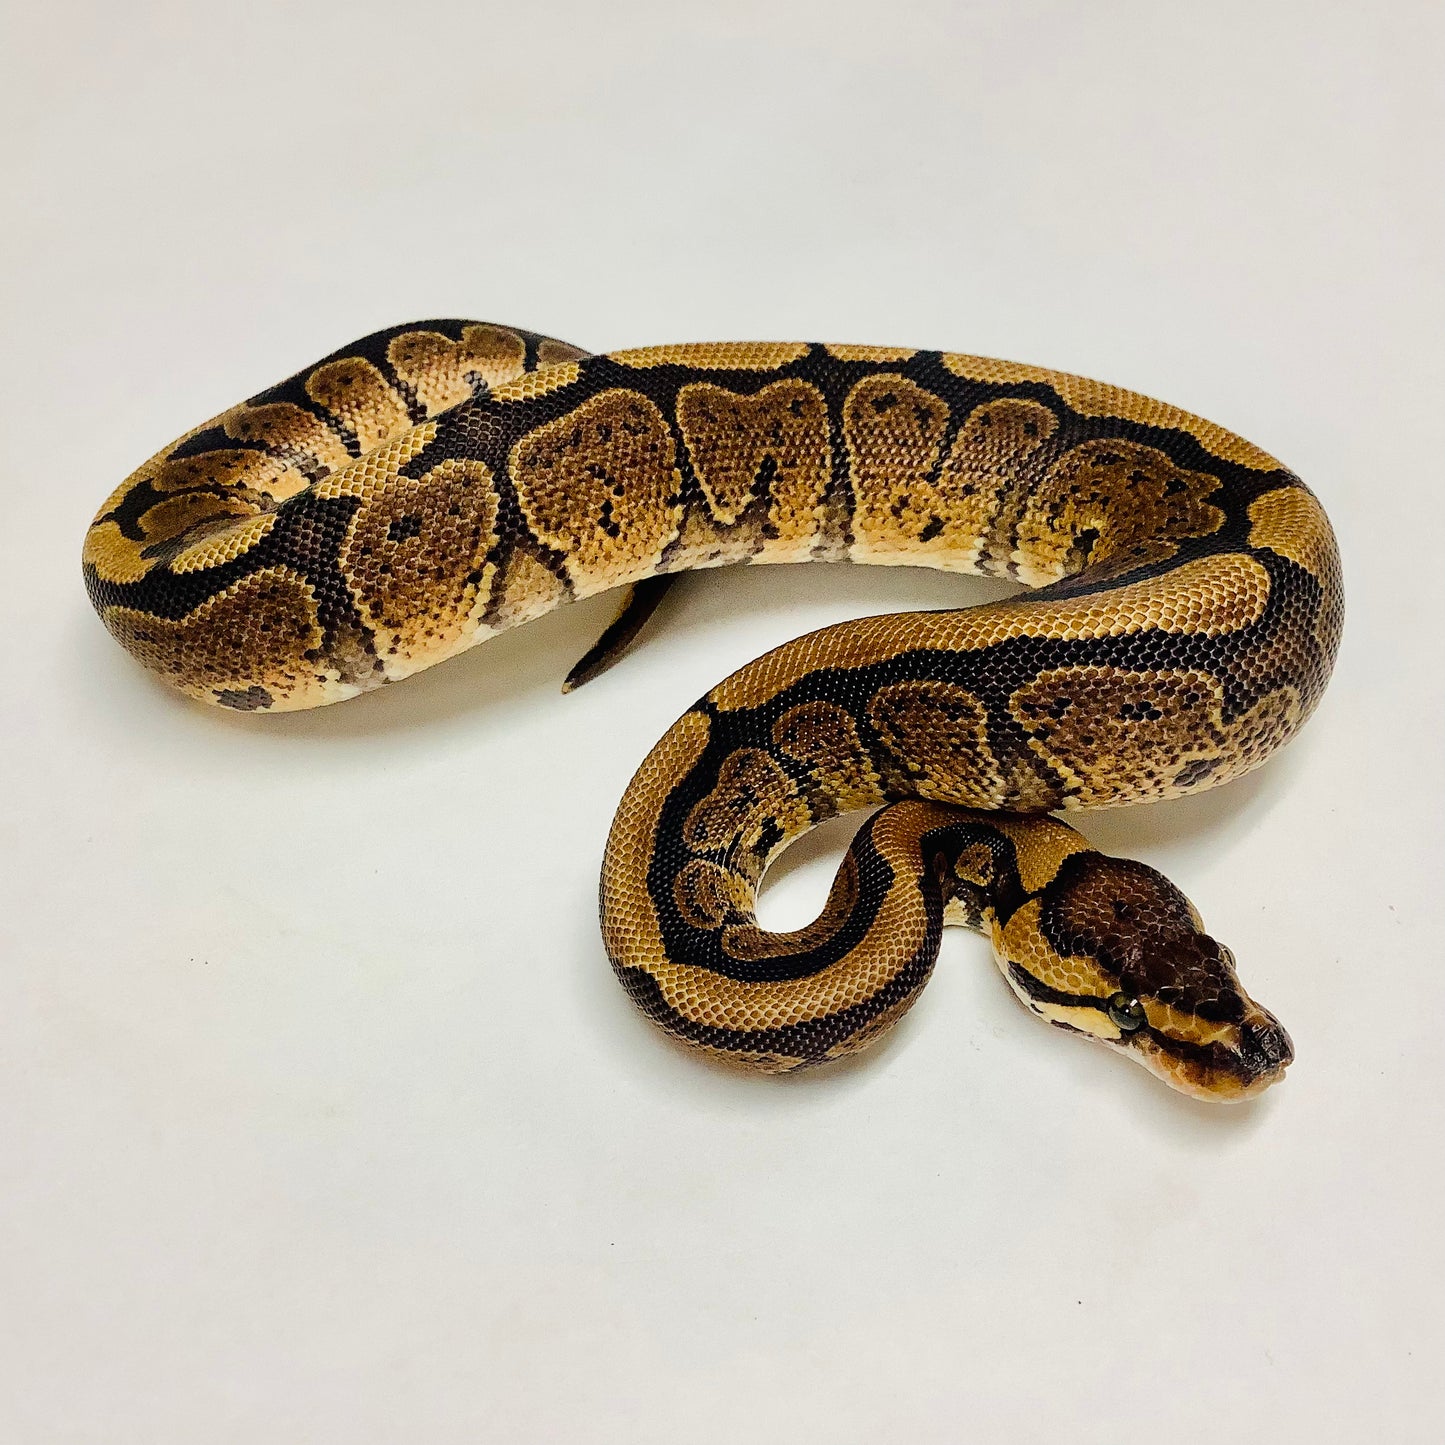 Red Stripe Ball Python - Male #2021M03